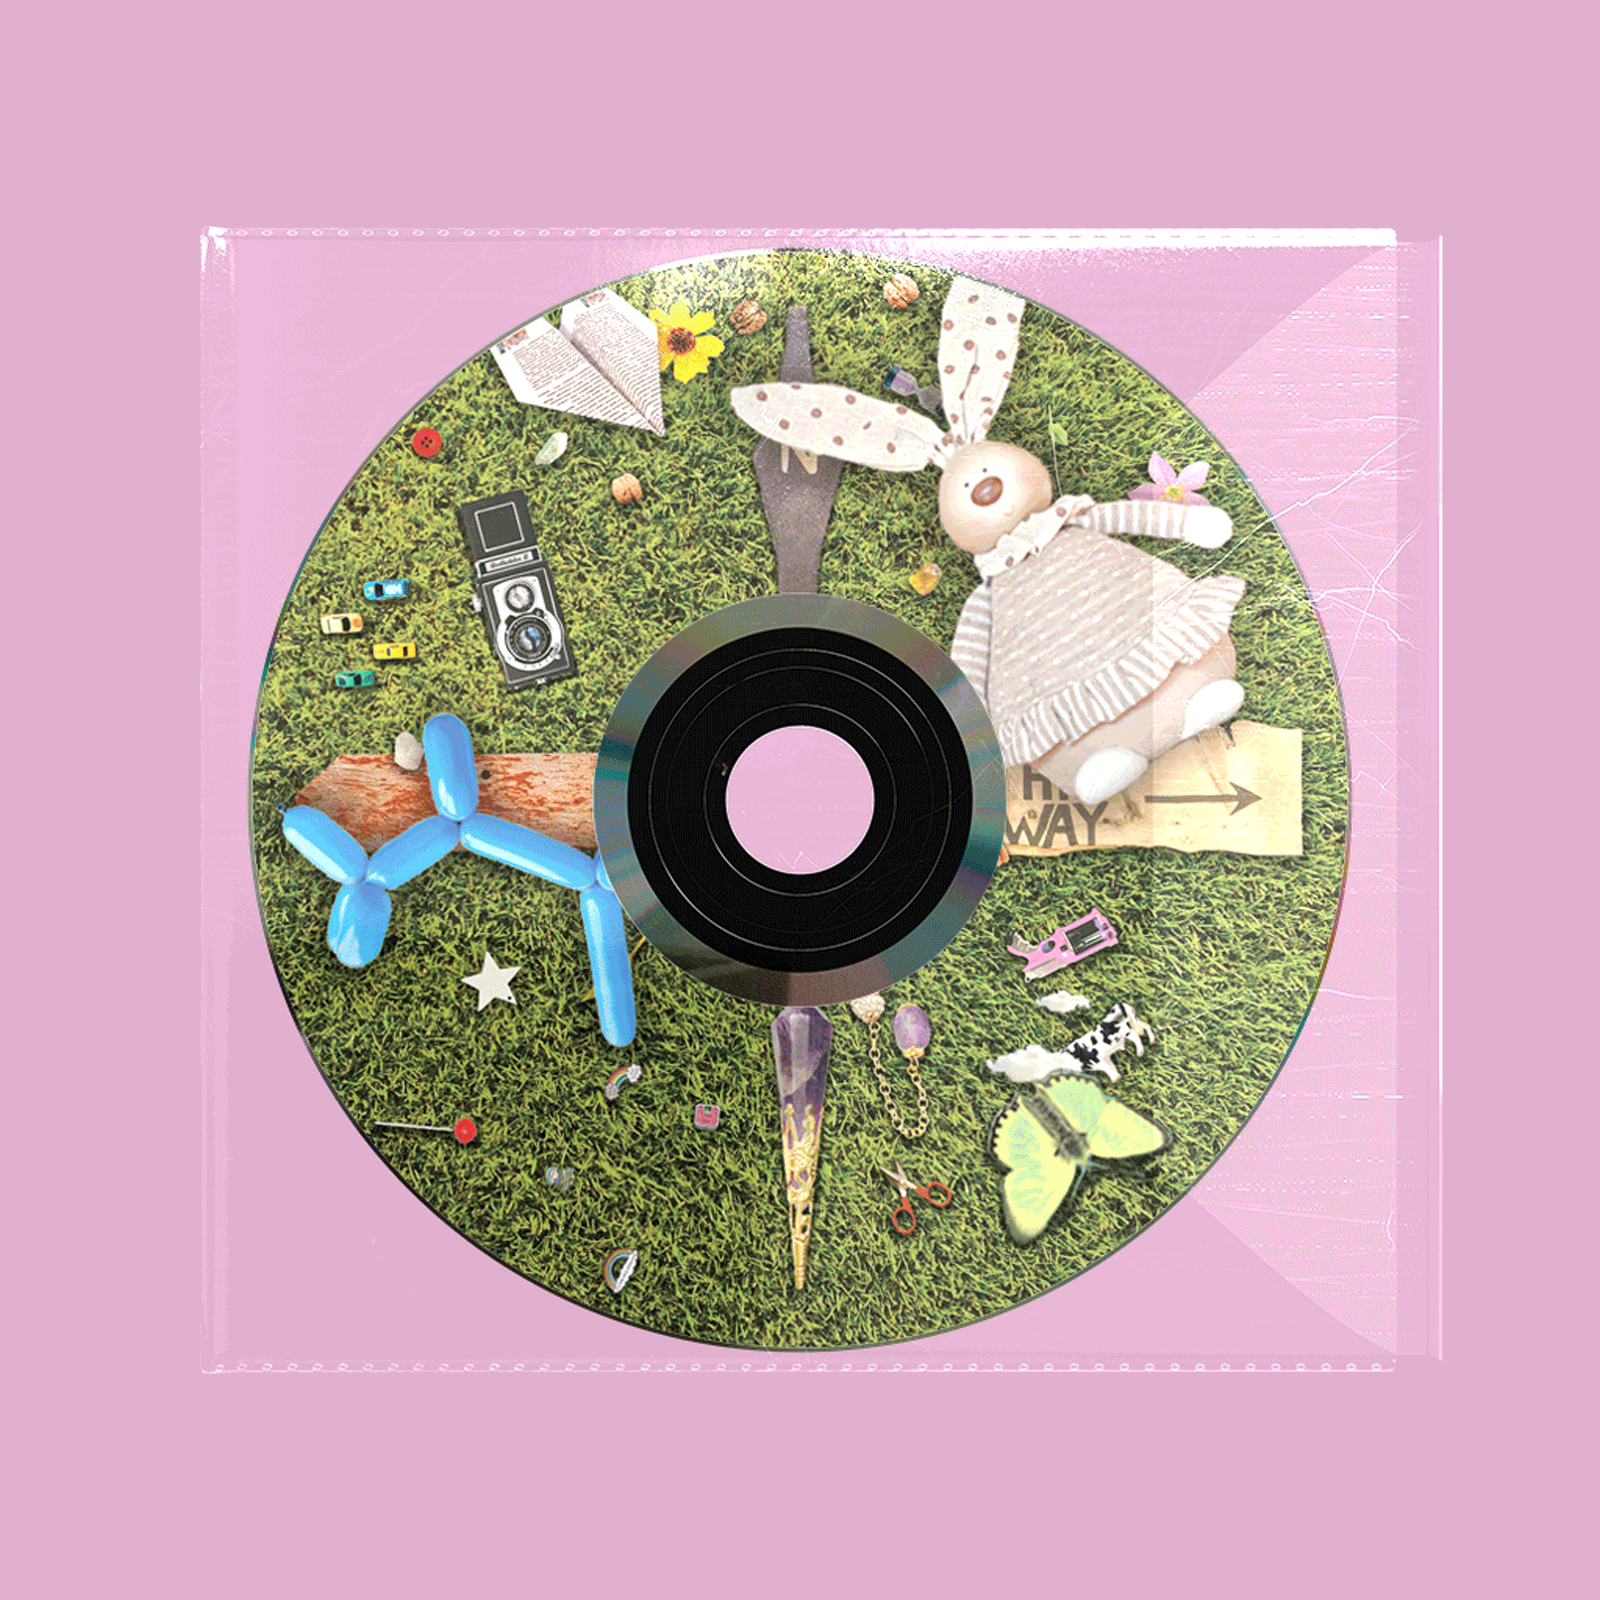 “SHIFT: The New Breeze”, CD